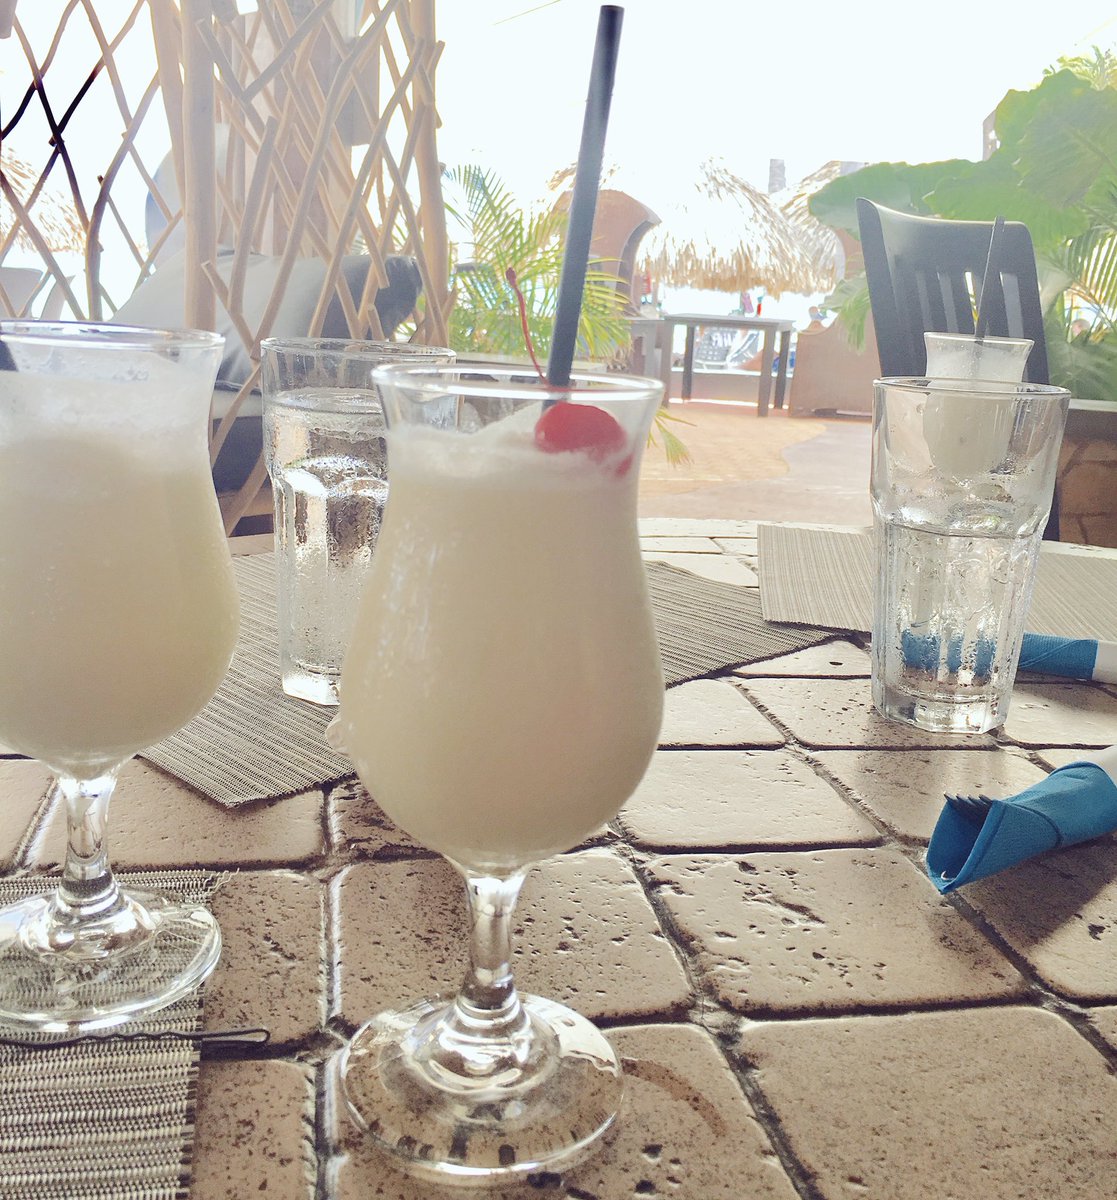 This is how we lunch in the tropics. Doing why I do best Lean-ing Aruba 😎 #lean #virginpiñacolada #aruba #gottolovelean